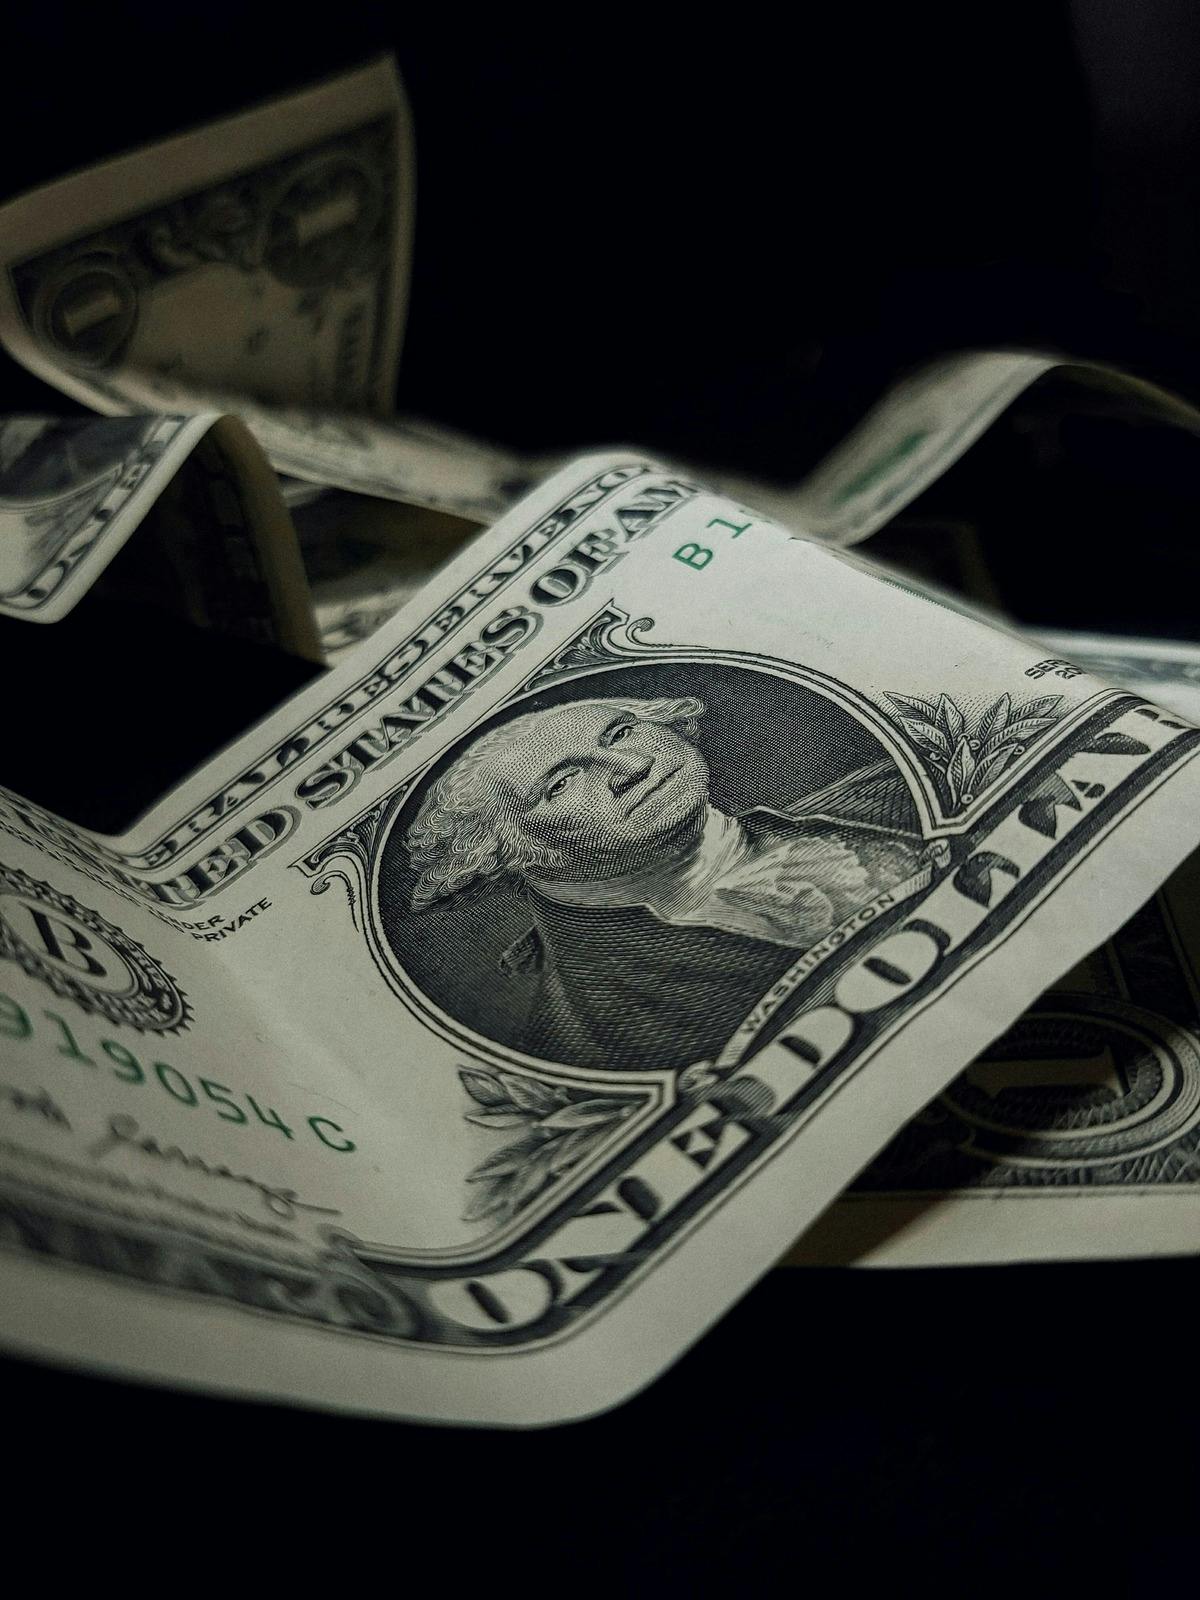 Closeup photo of pile of US dollar bills.